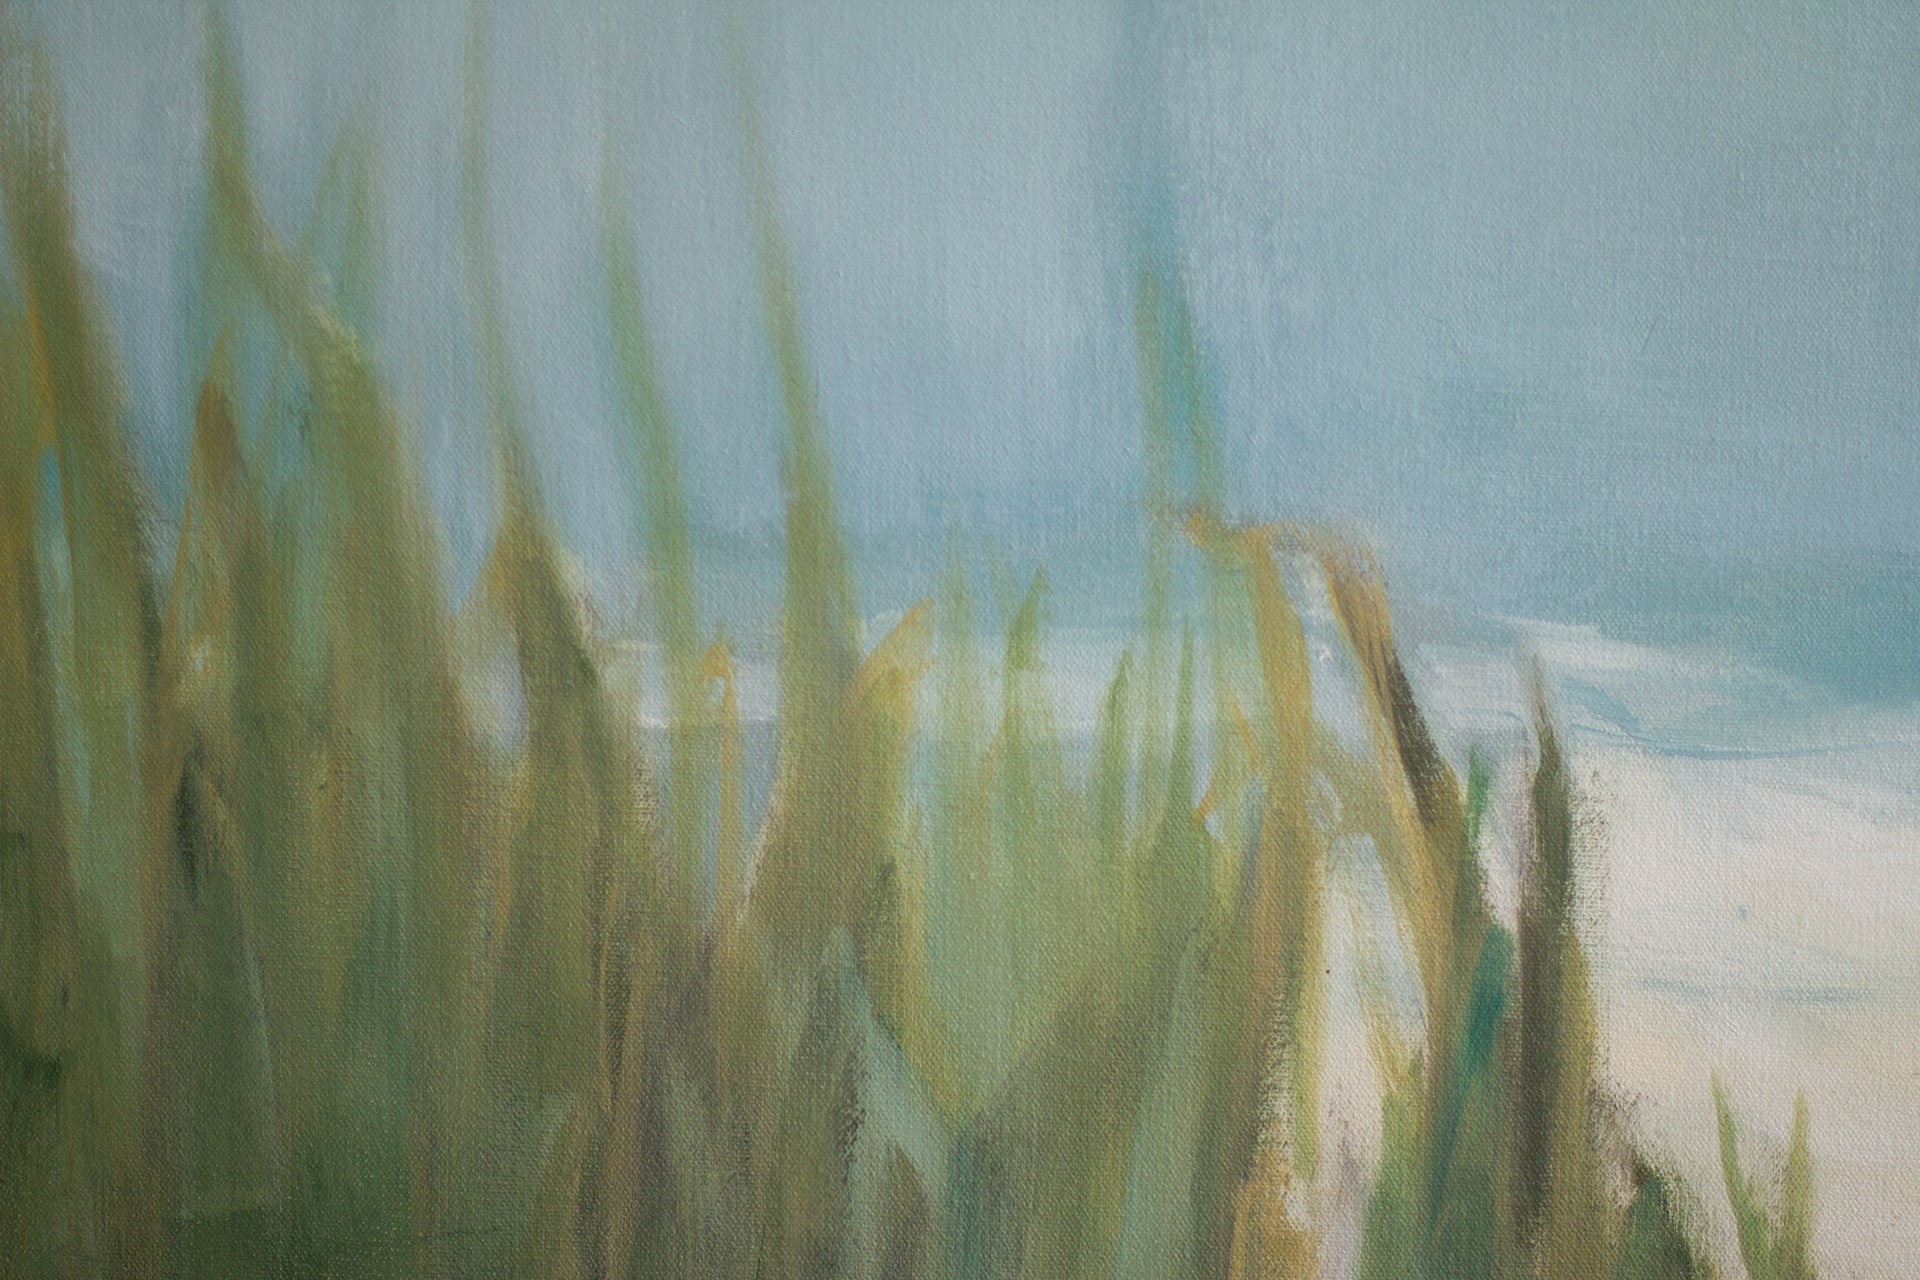 Dune Grasses by Clara Blaylock